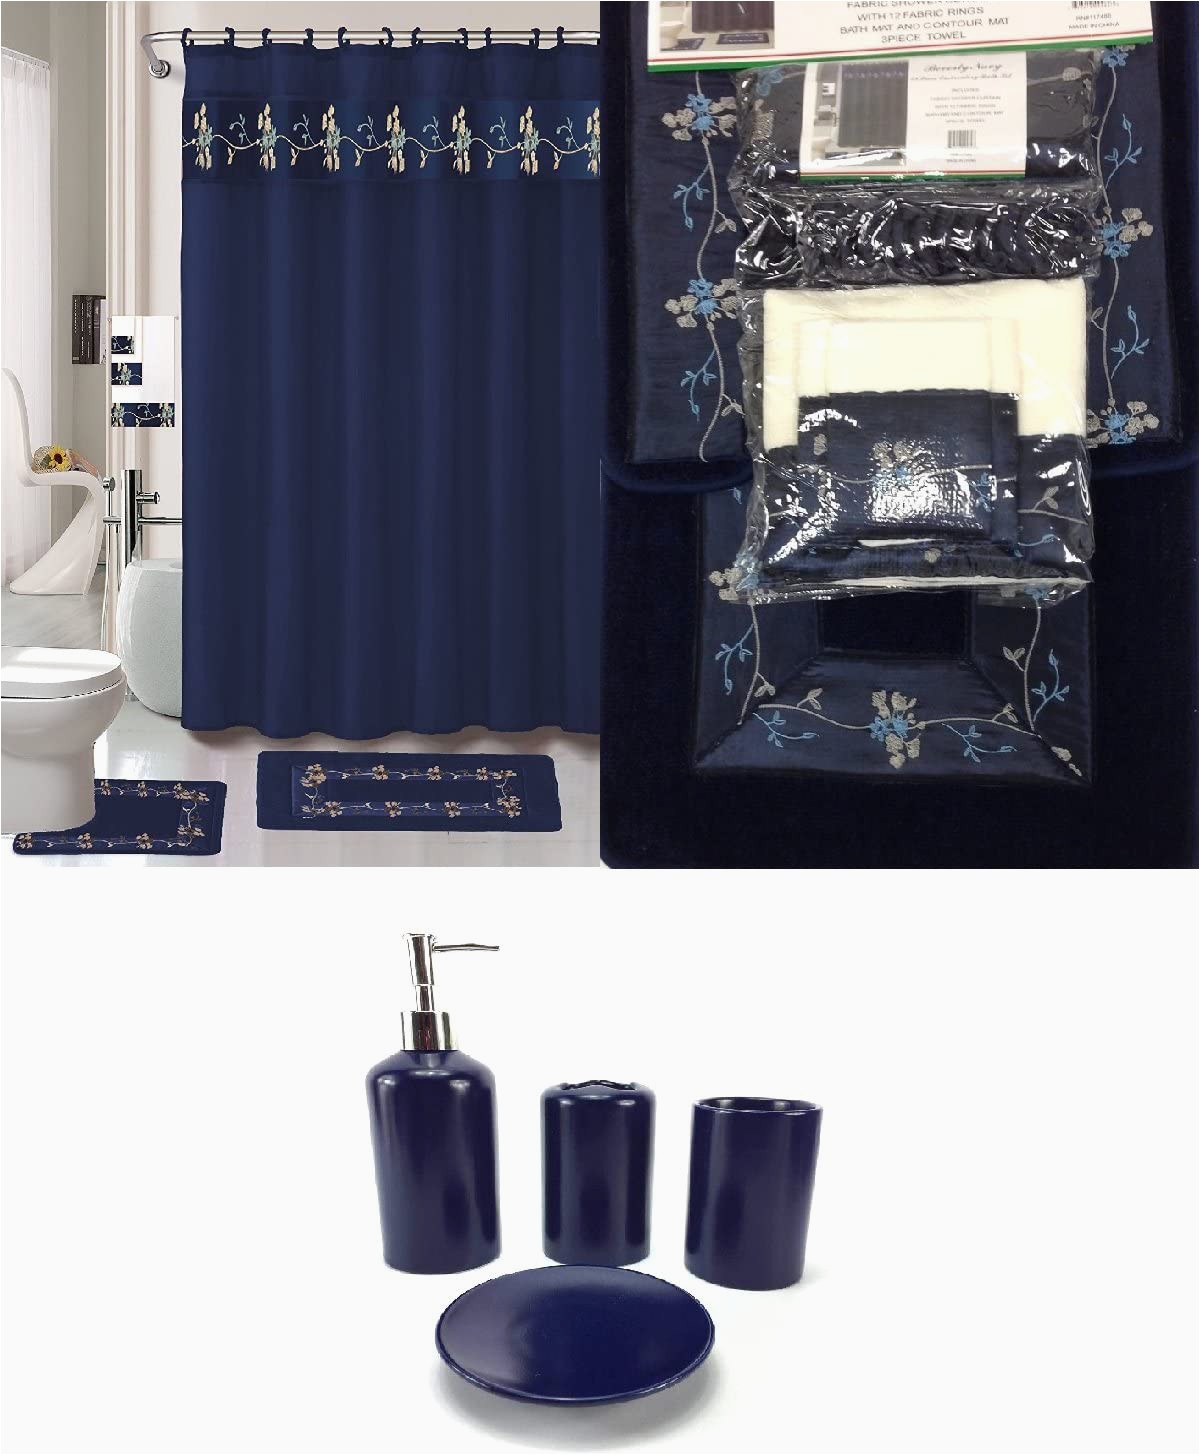 Bath Rug and towel Sets 22 Piece Bath Accessory Set Navy Blue Flower Bathroom Rug Set Shower Curtain & Accessories